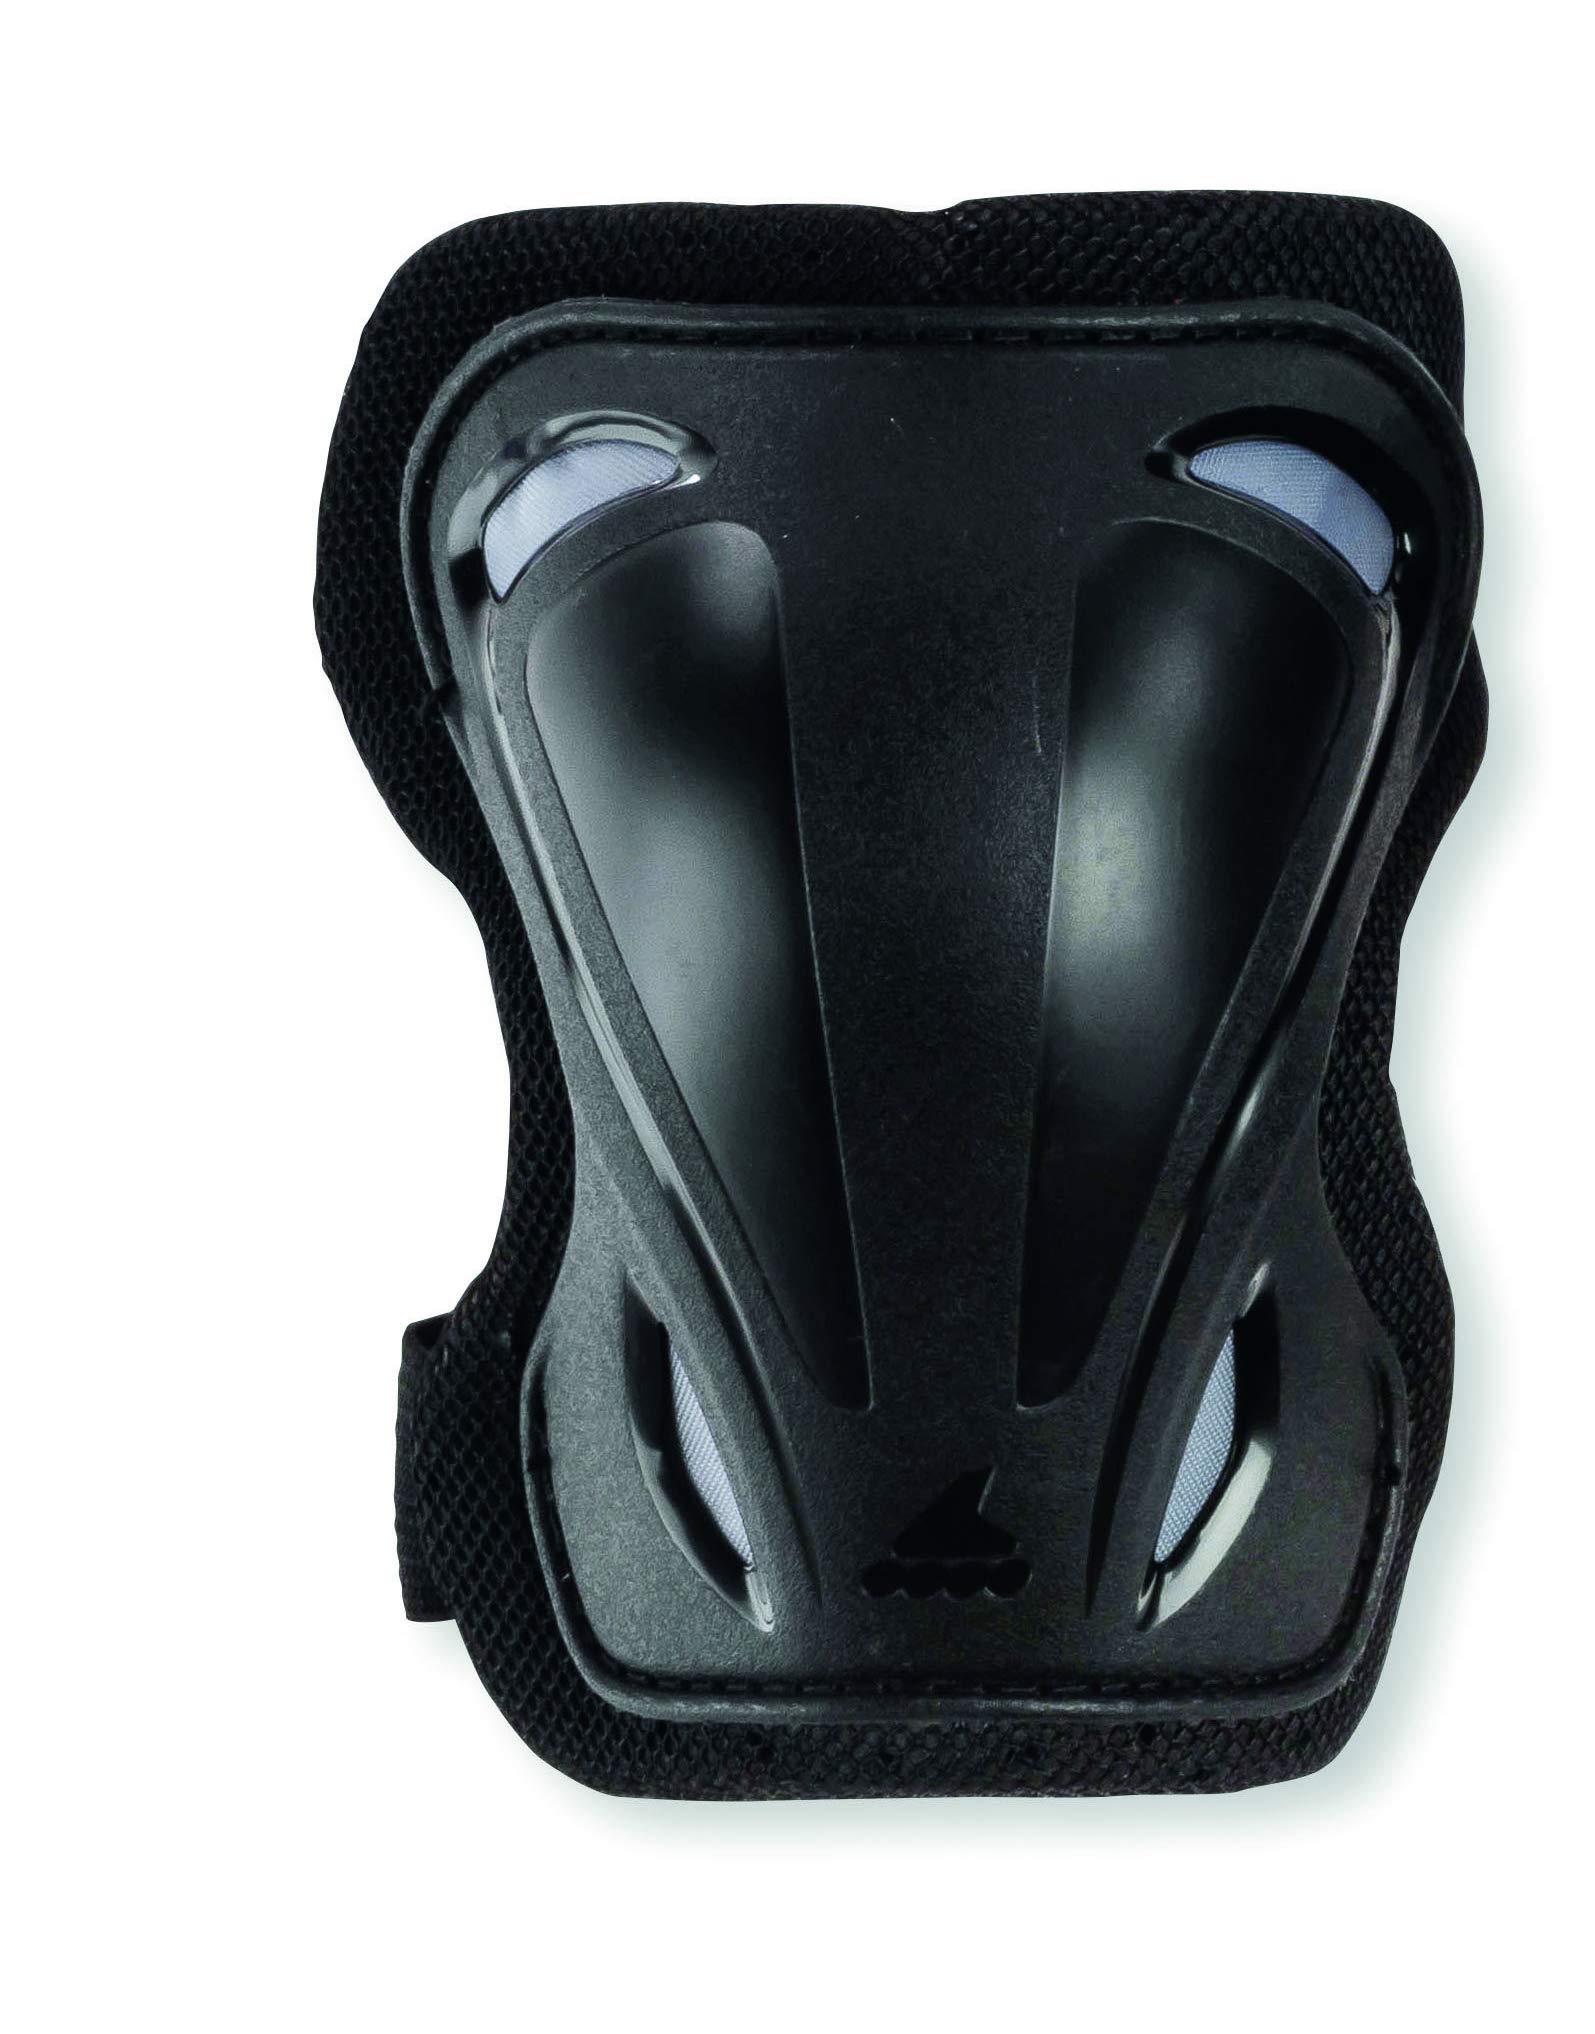 Rollerblade Skate Gear Knee Pad Protective Gear, Unisex, Multi Sport Protection, Black, Medium